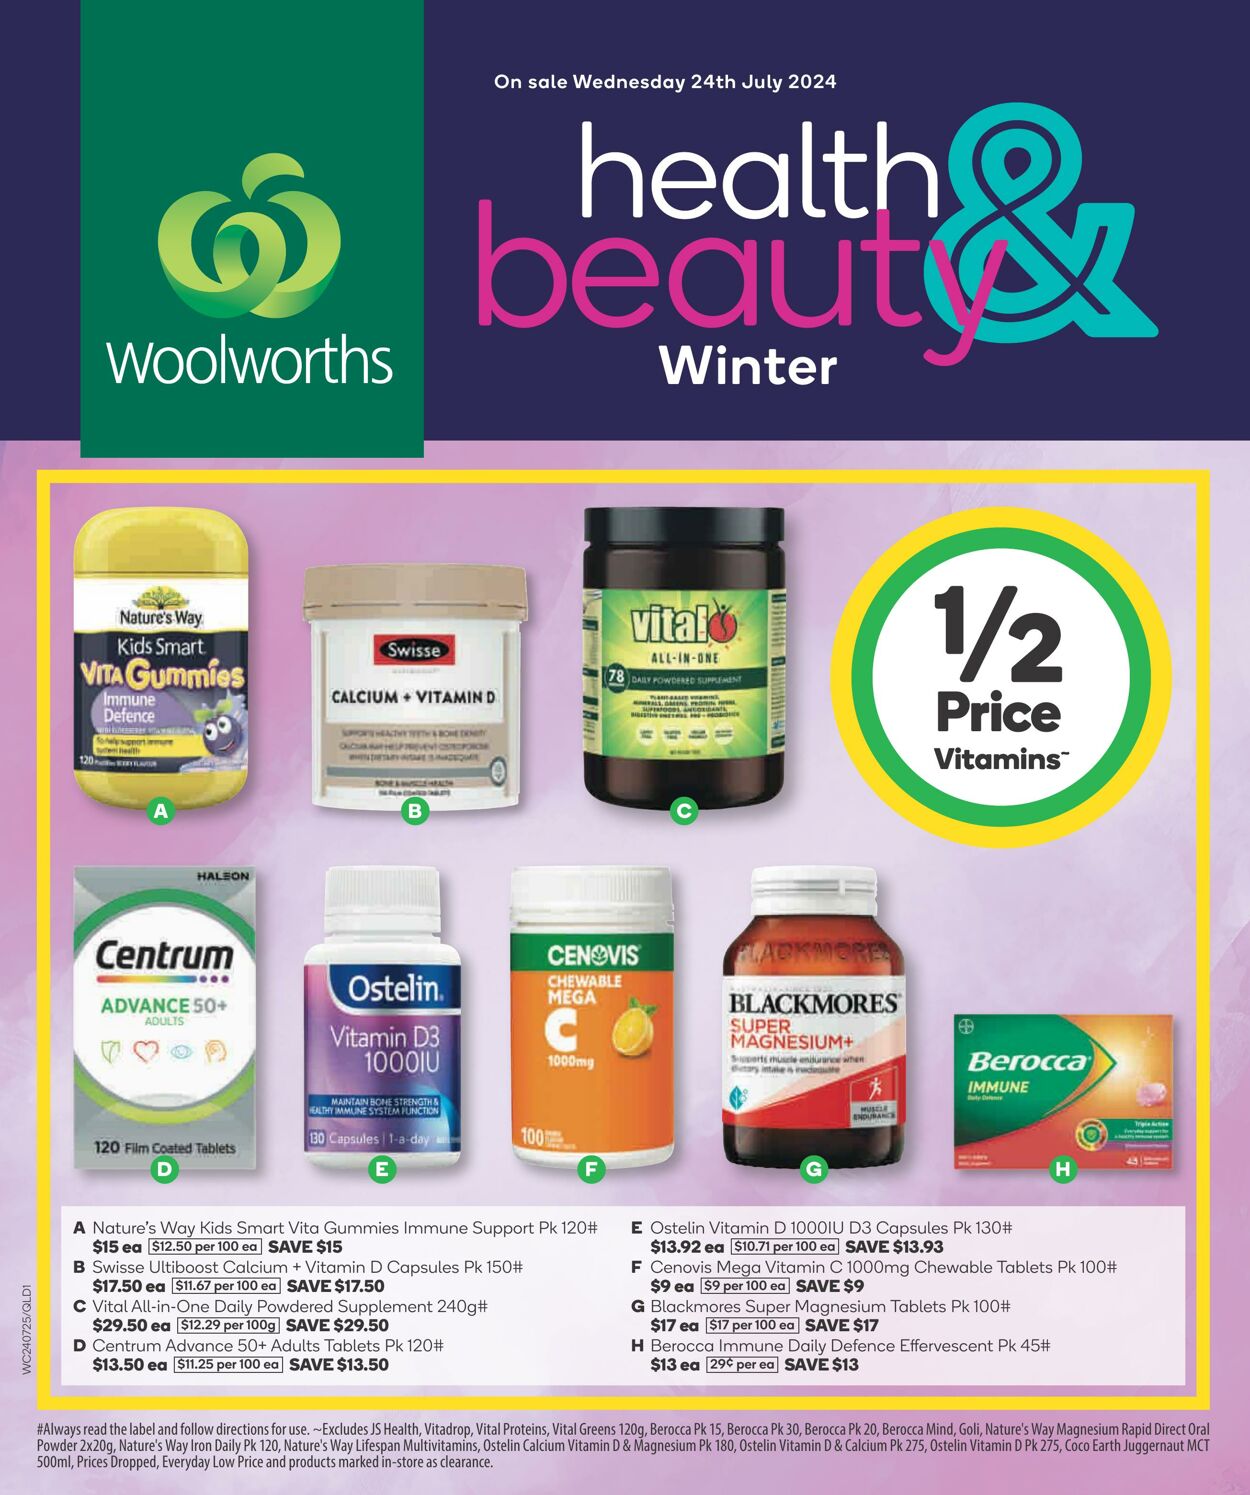 Catalogue Woolworths - Winter Health & Beauty Catalogue QLD 24 Jul, 2024 - 30 Jul, 2024